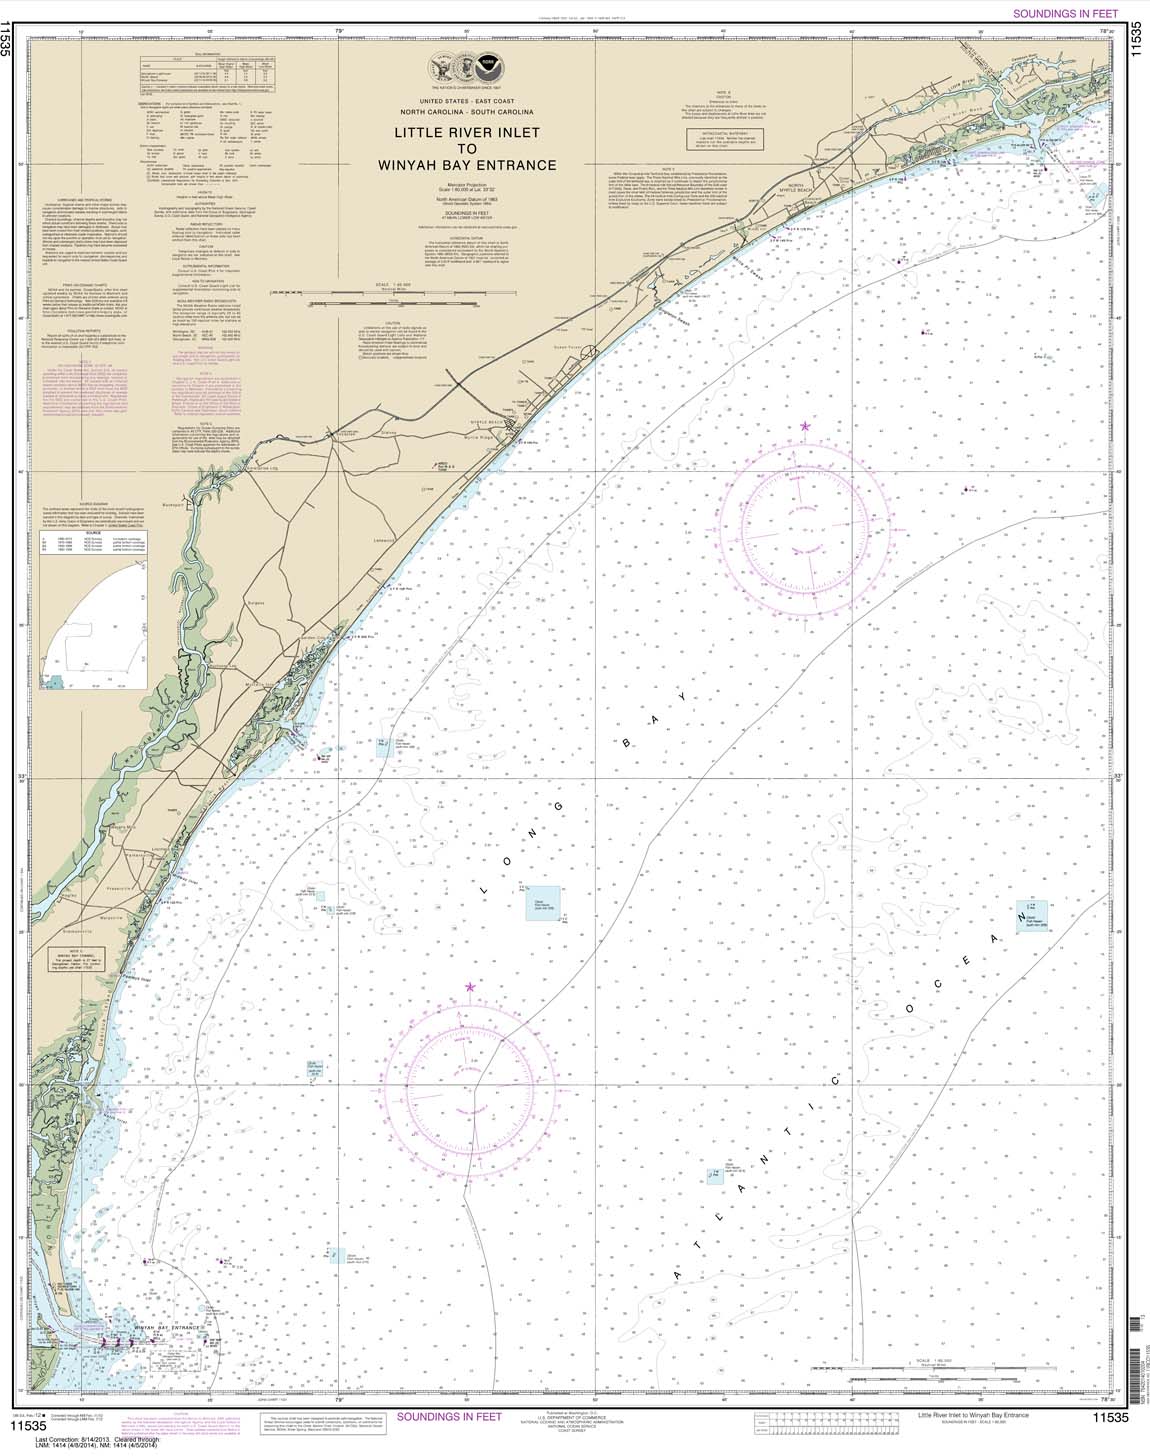 HISTORICAL NOAA Chart 11535: Little River lnlet to Winyah Bay Entrance